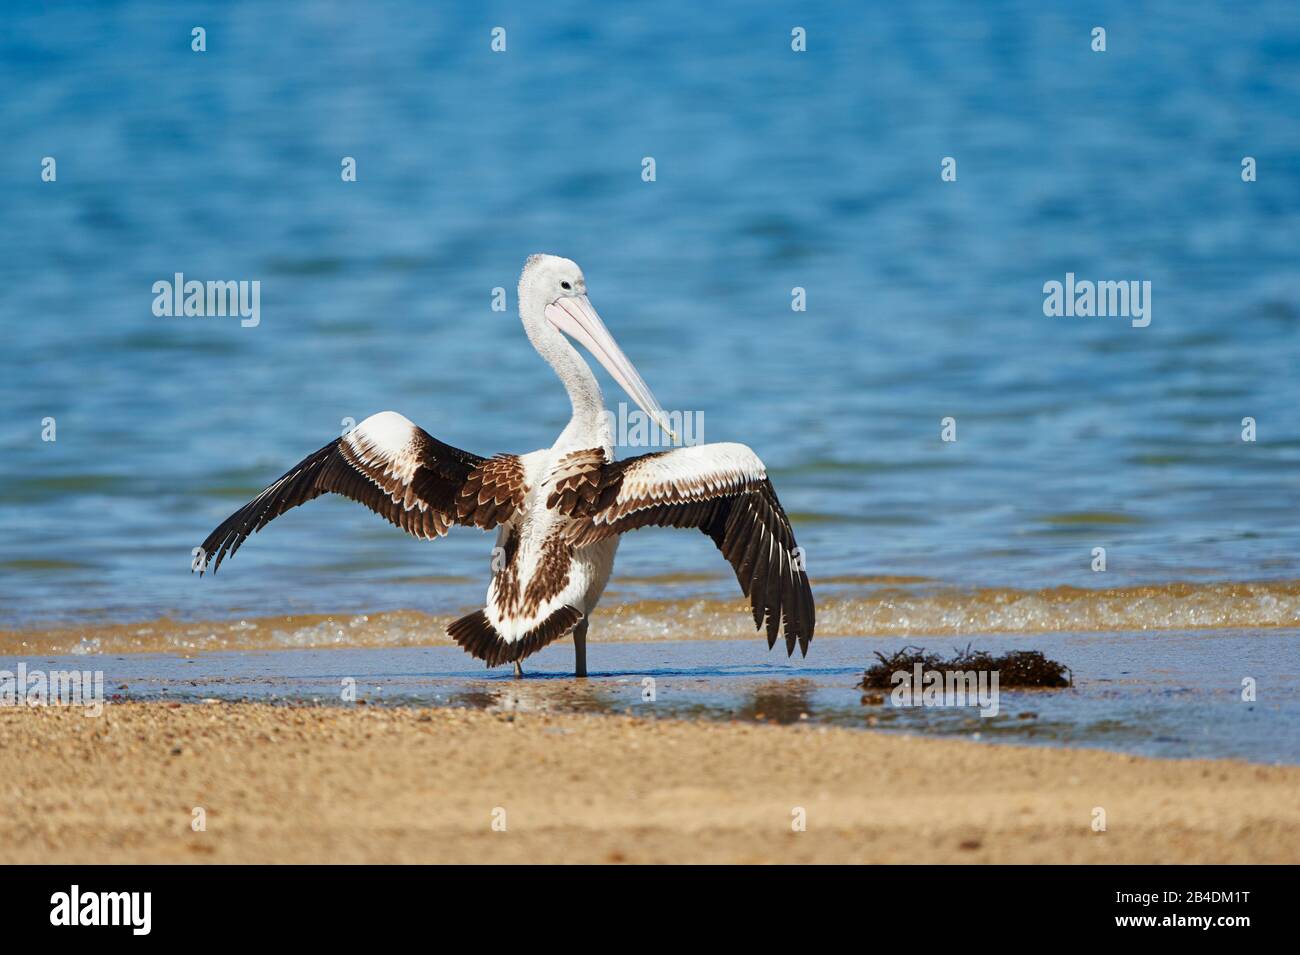 African Pelican (Pelecanus conspicillatus), water, standing, close-up, New South Wales, Australia Stock Photo